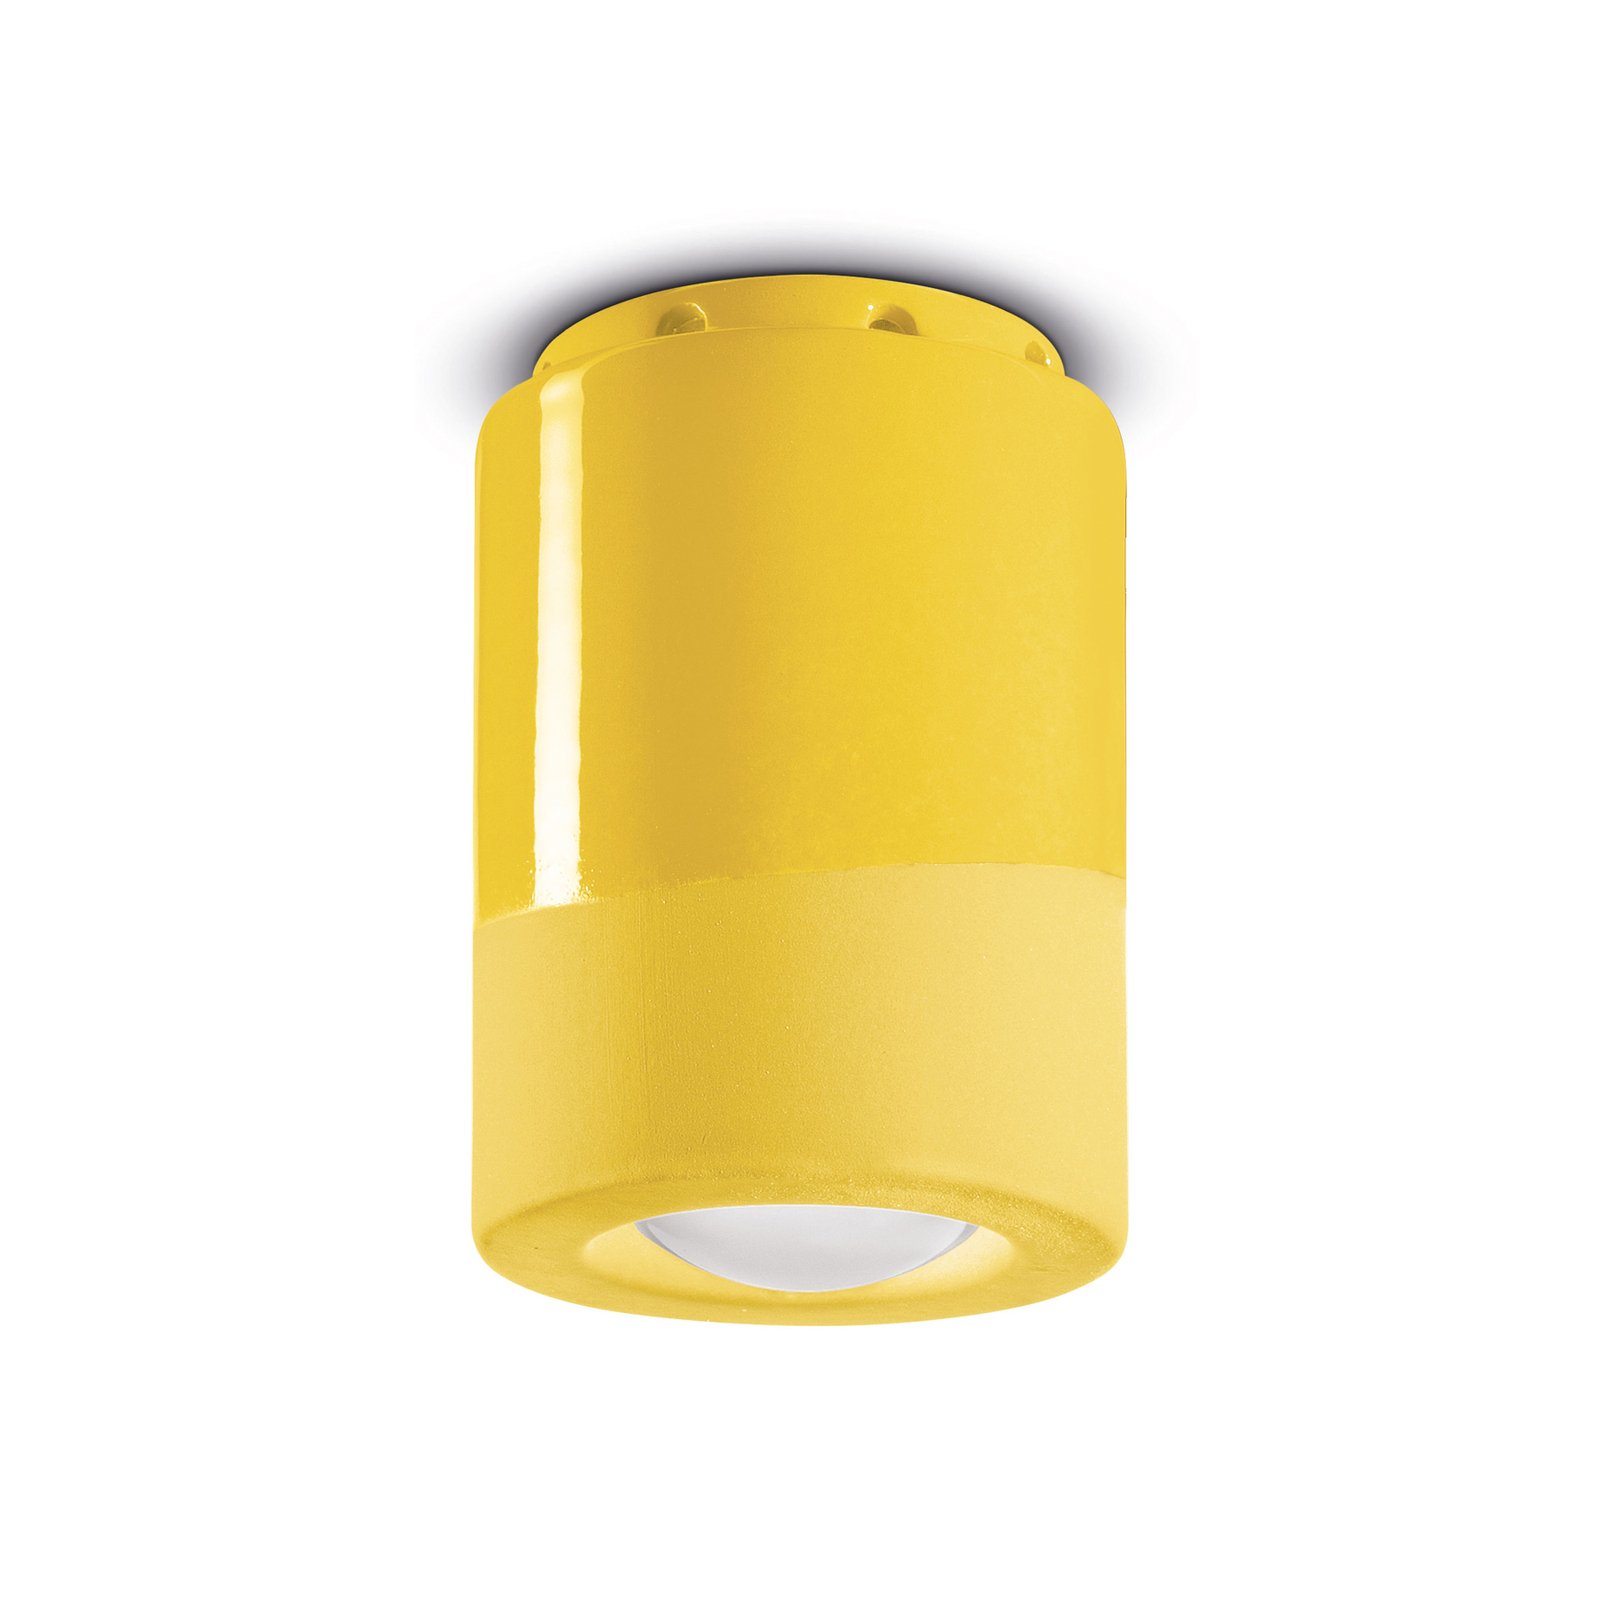 PI loftslampe, cylindrisk, Ø 8,5 cm, gul